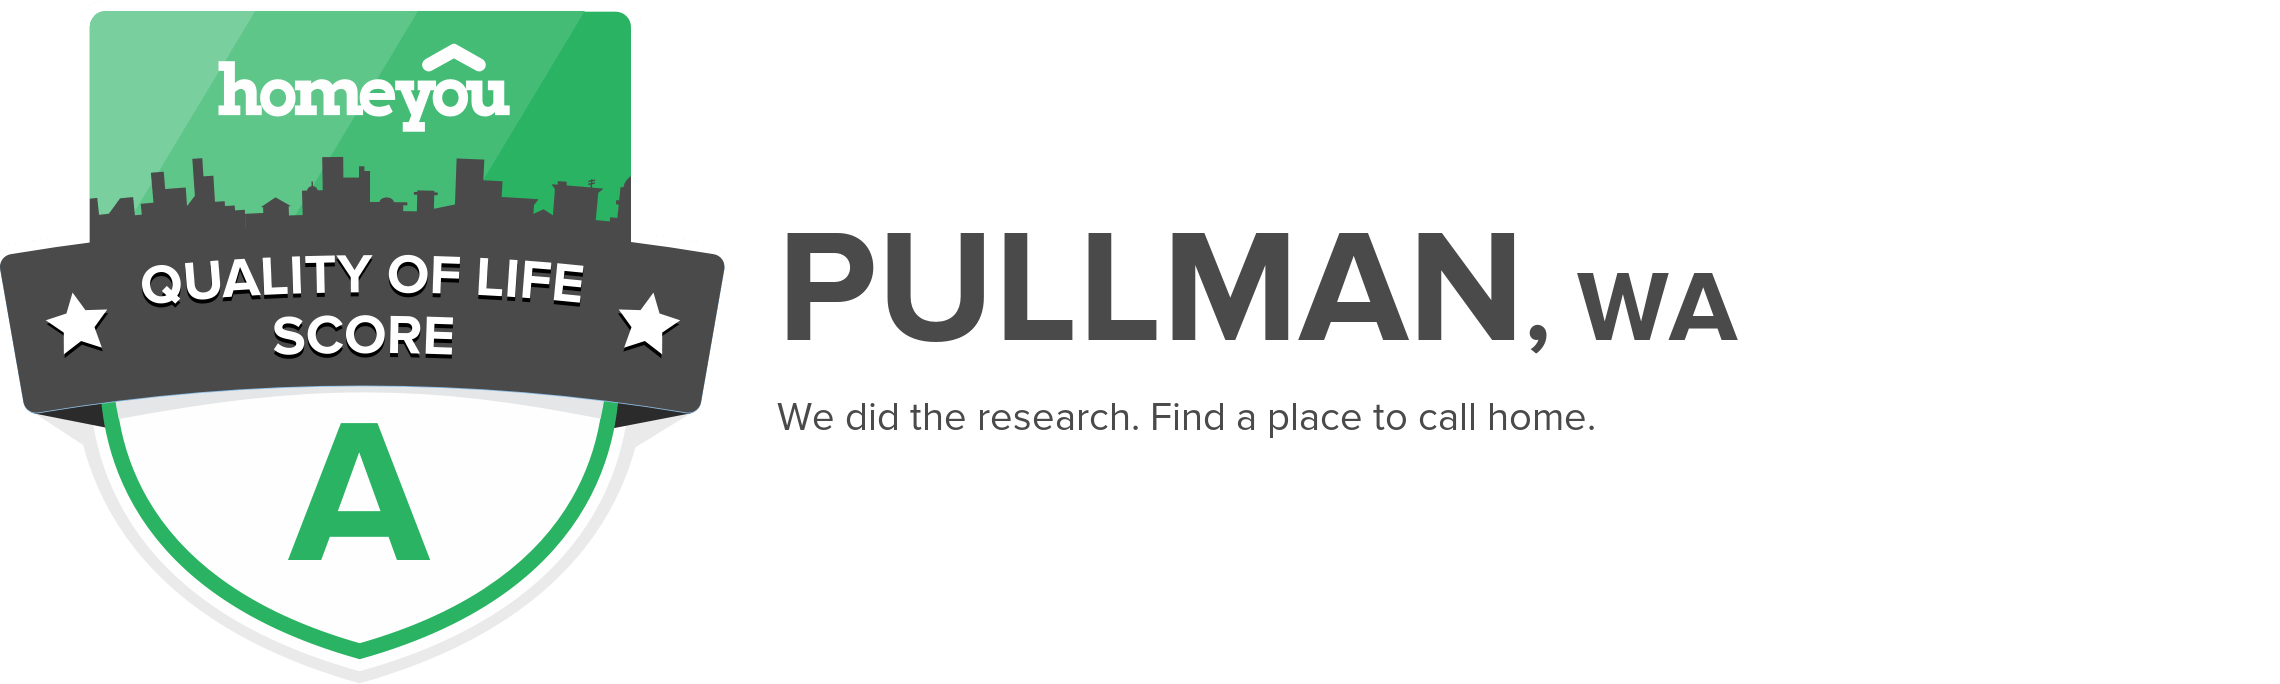 Pullman, WA